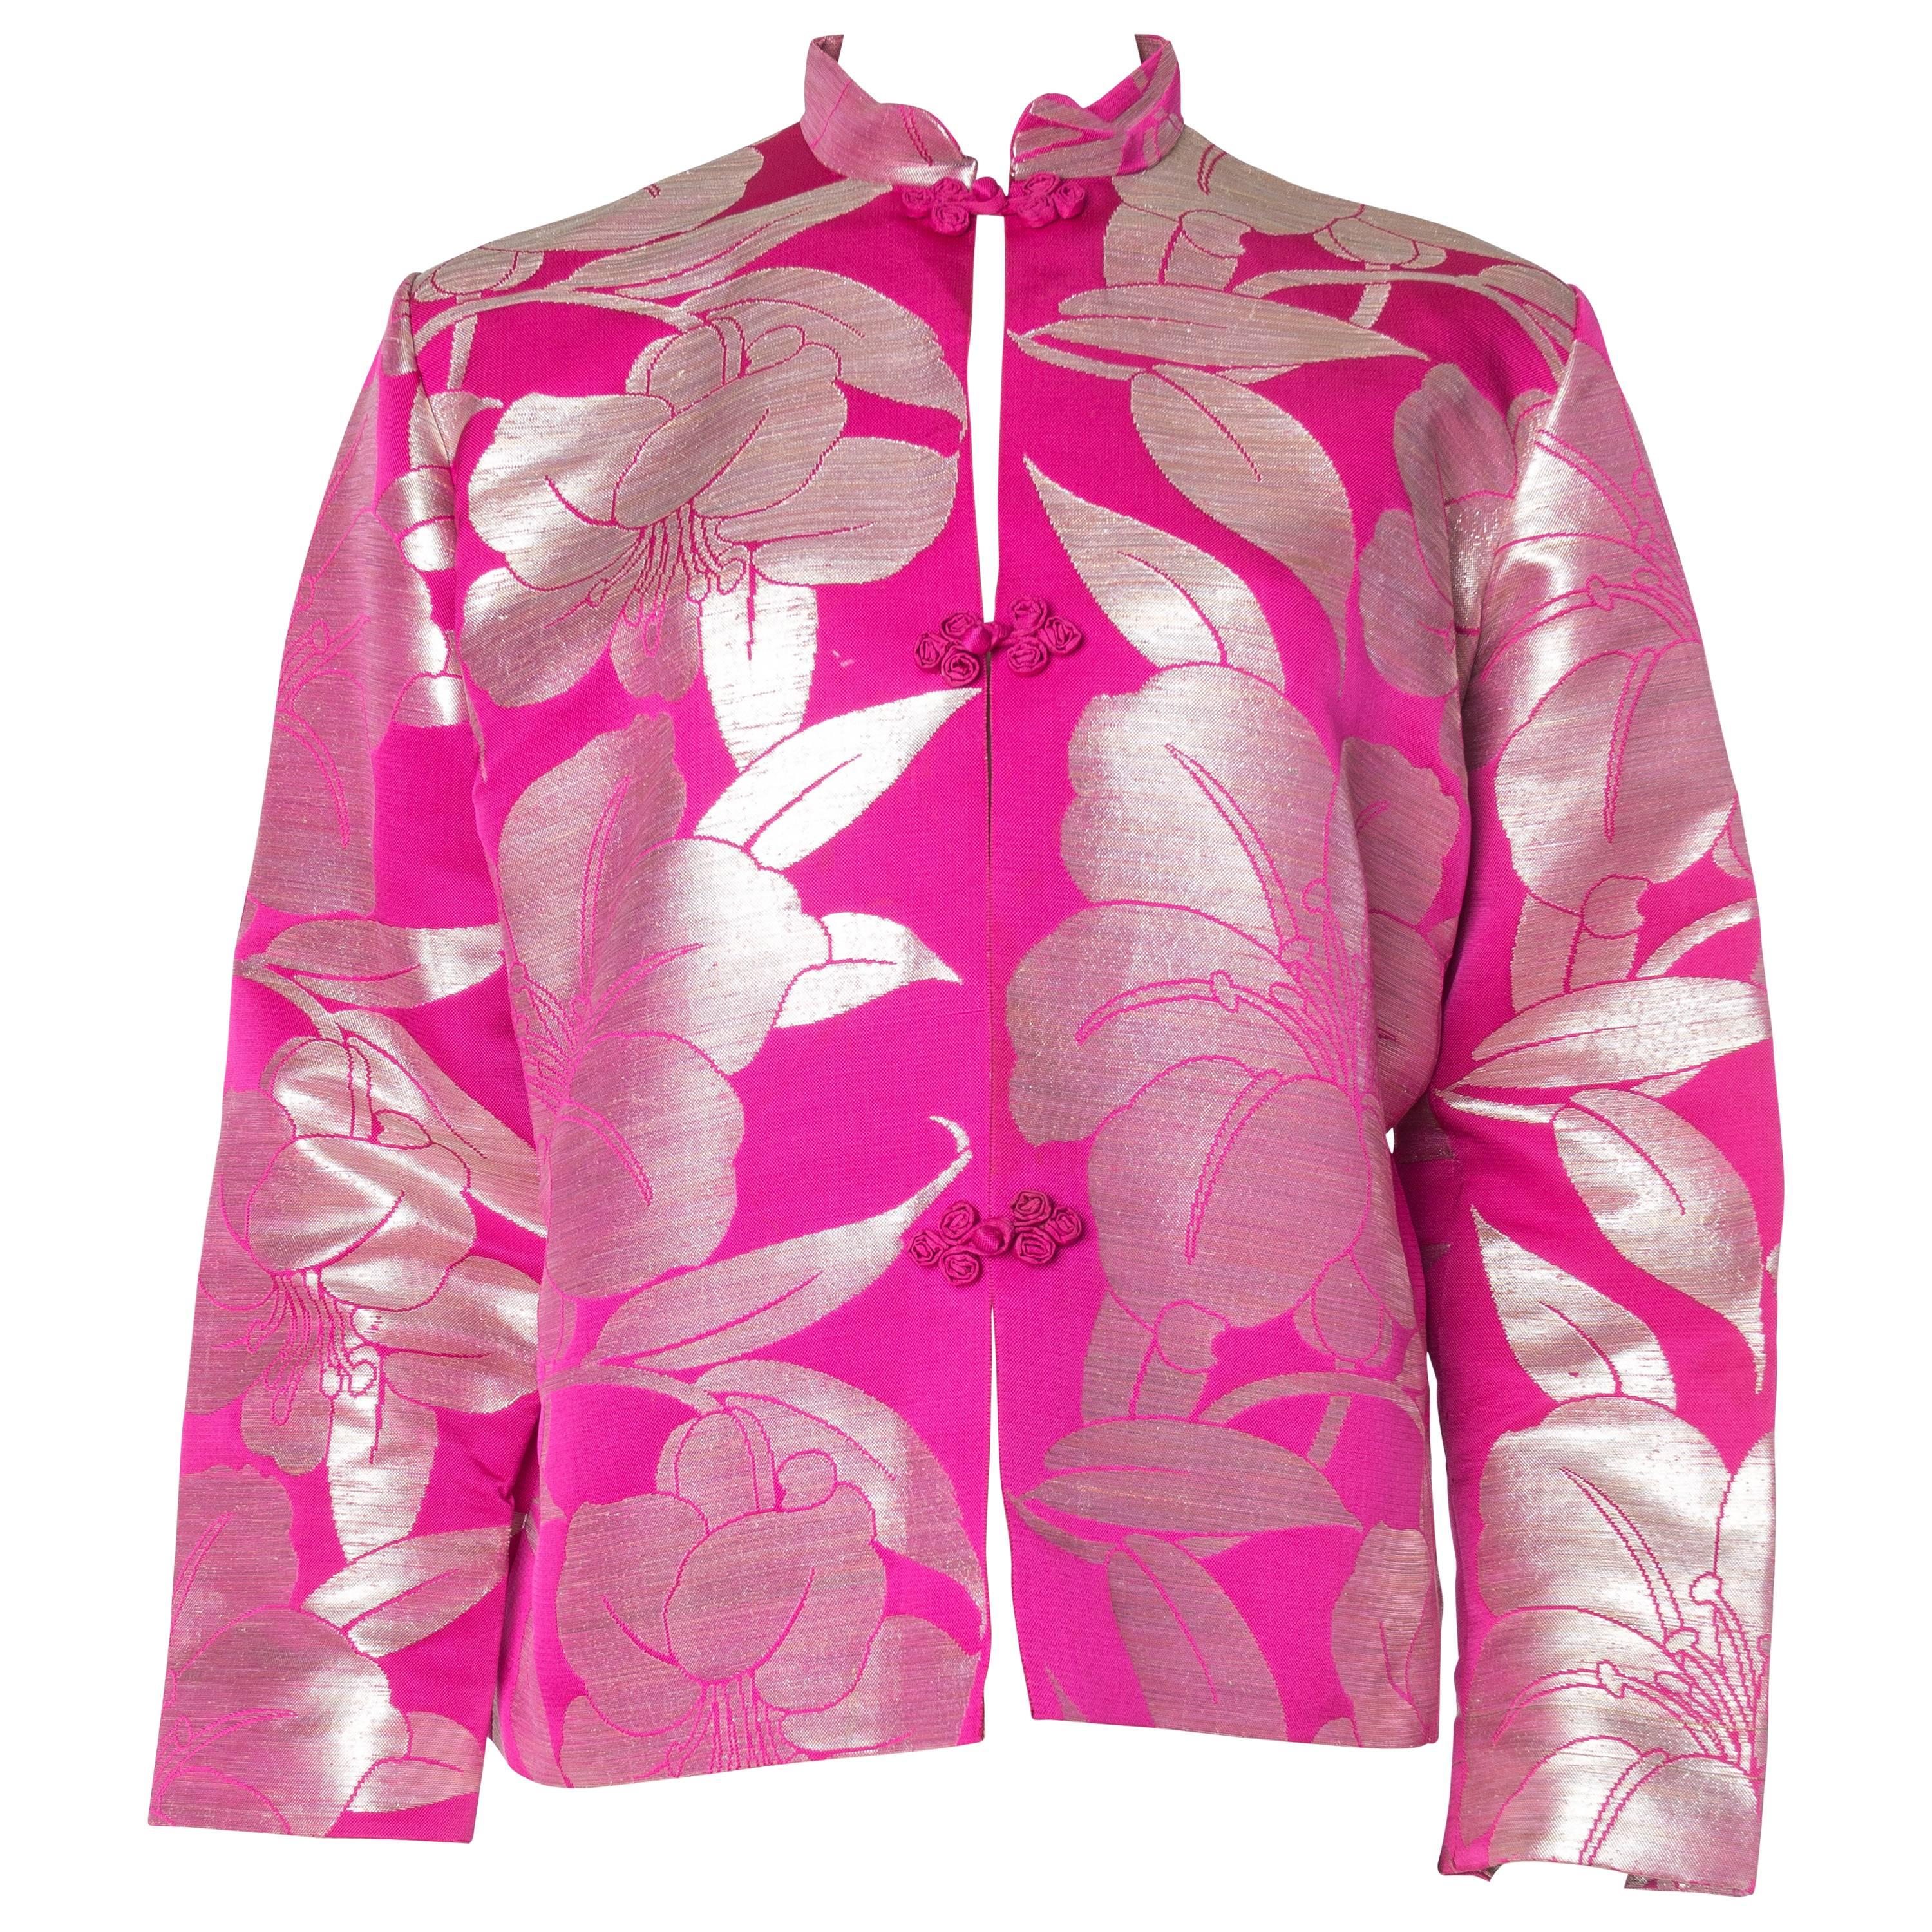 1960S Obi Pink Floral Print Japanese Swing Jacket